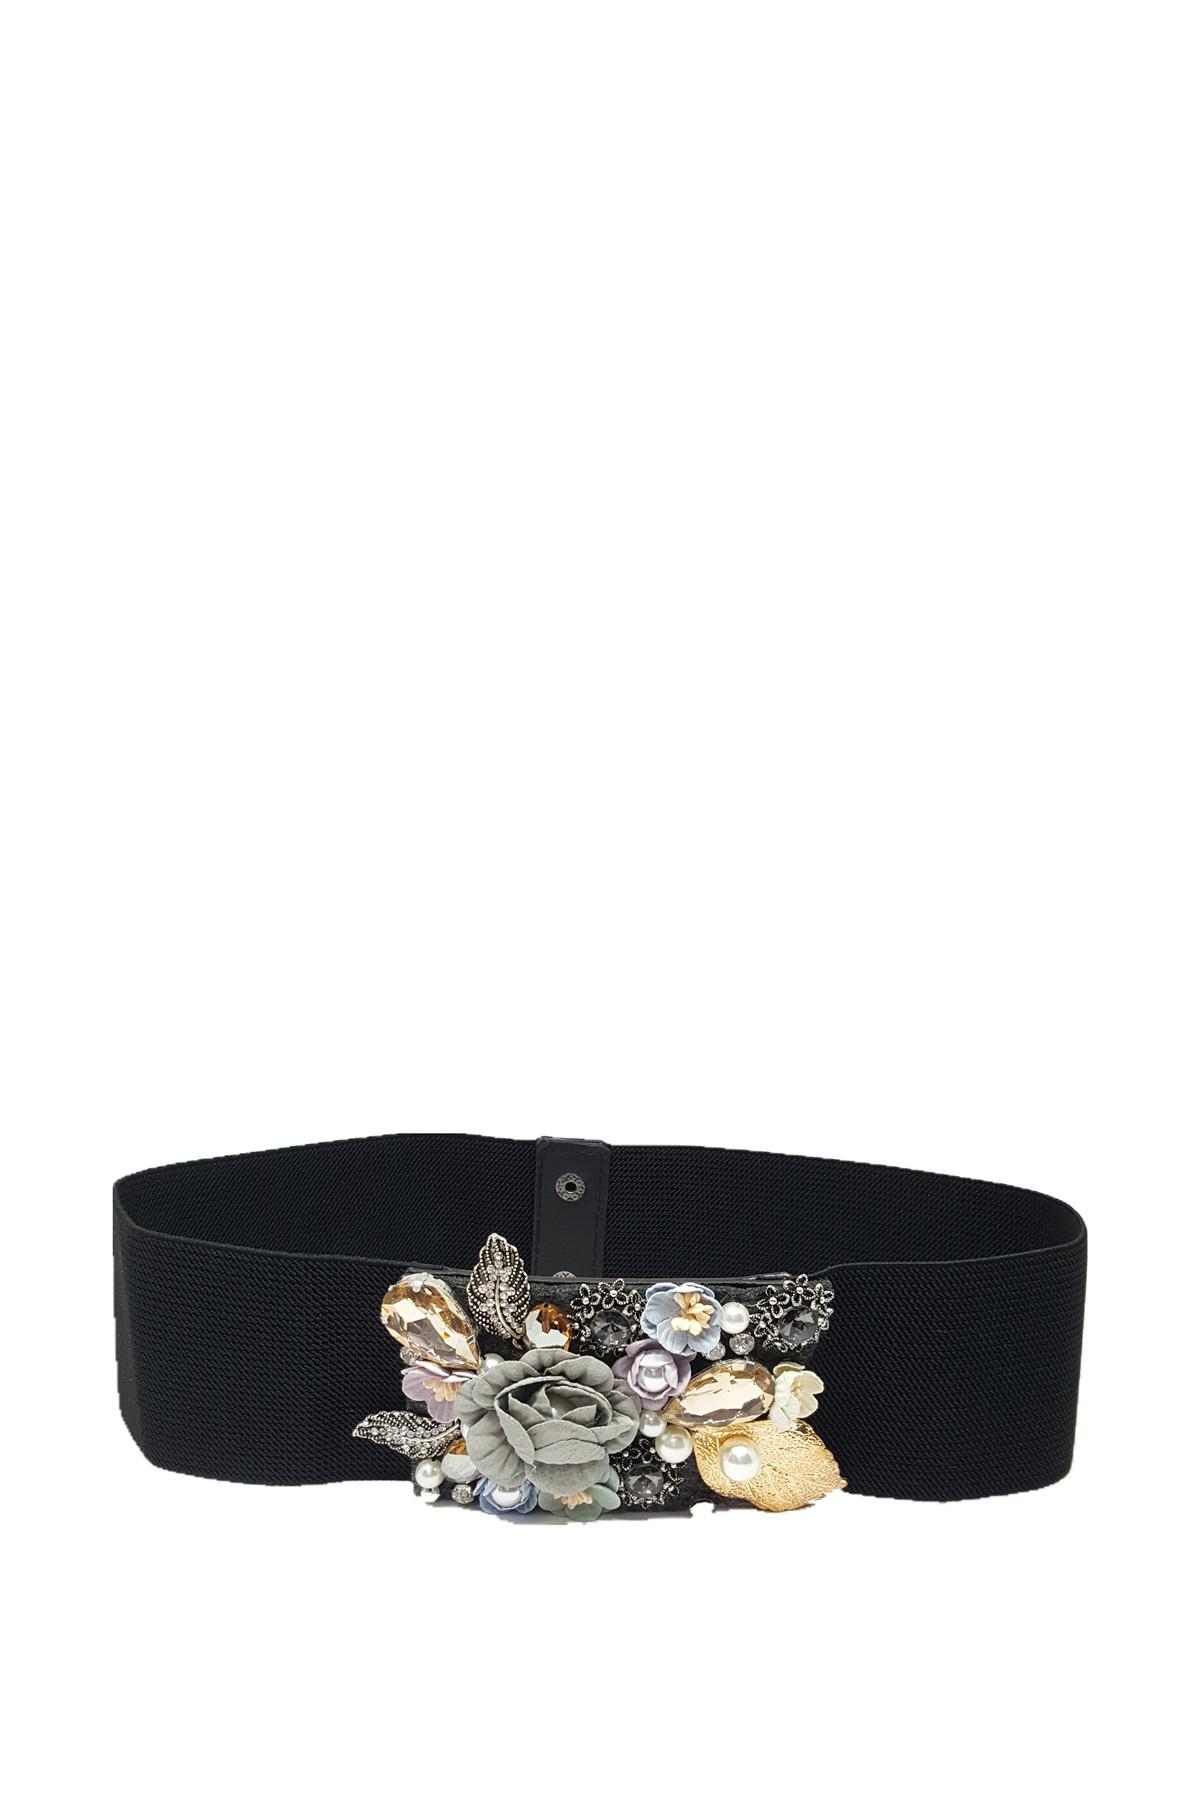 Cinturones Complementos Black BEST ANGEL SA1541 #c Efashion Paris